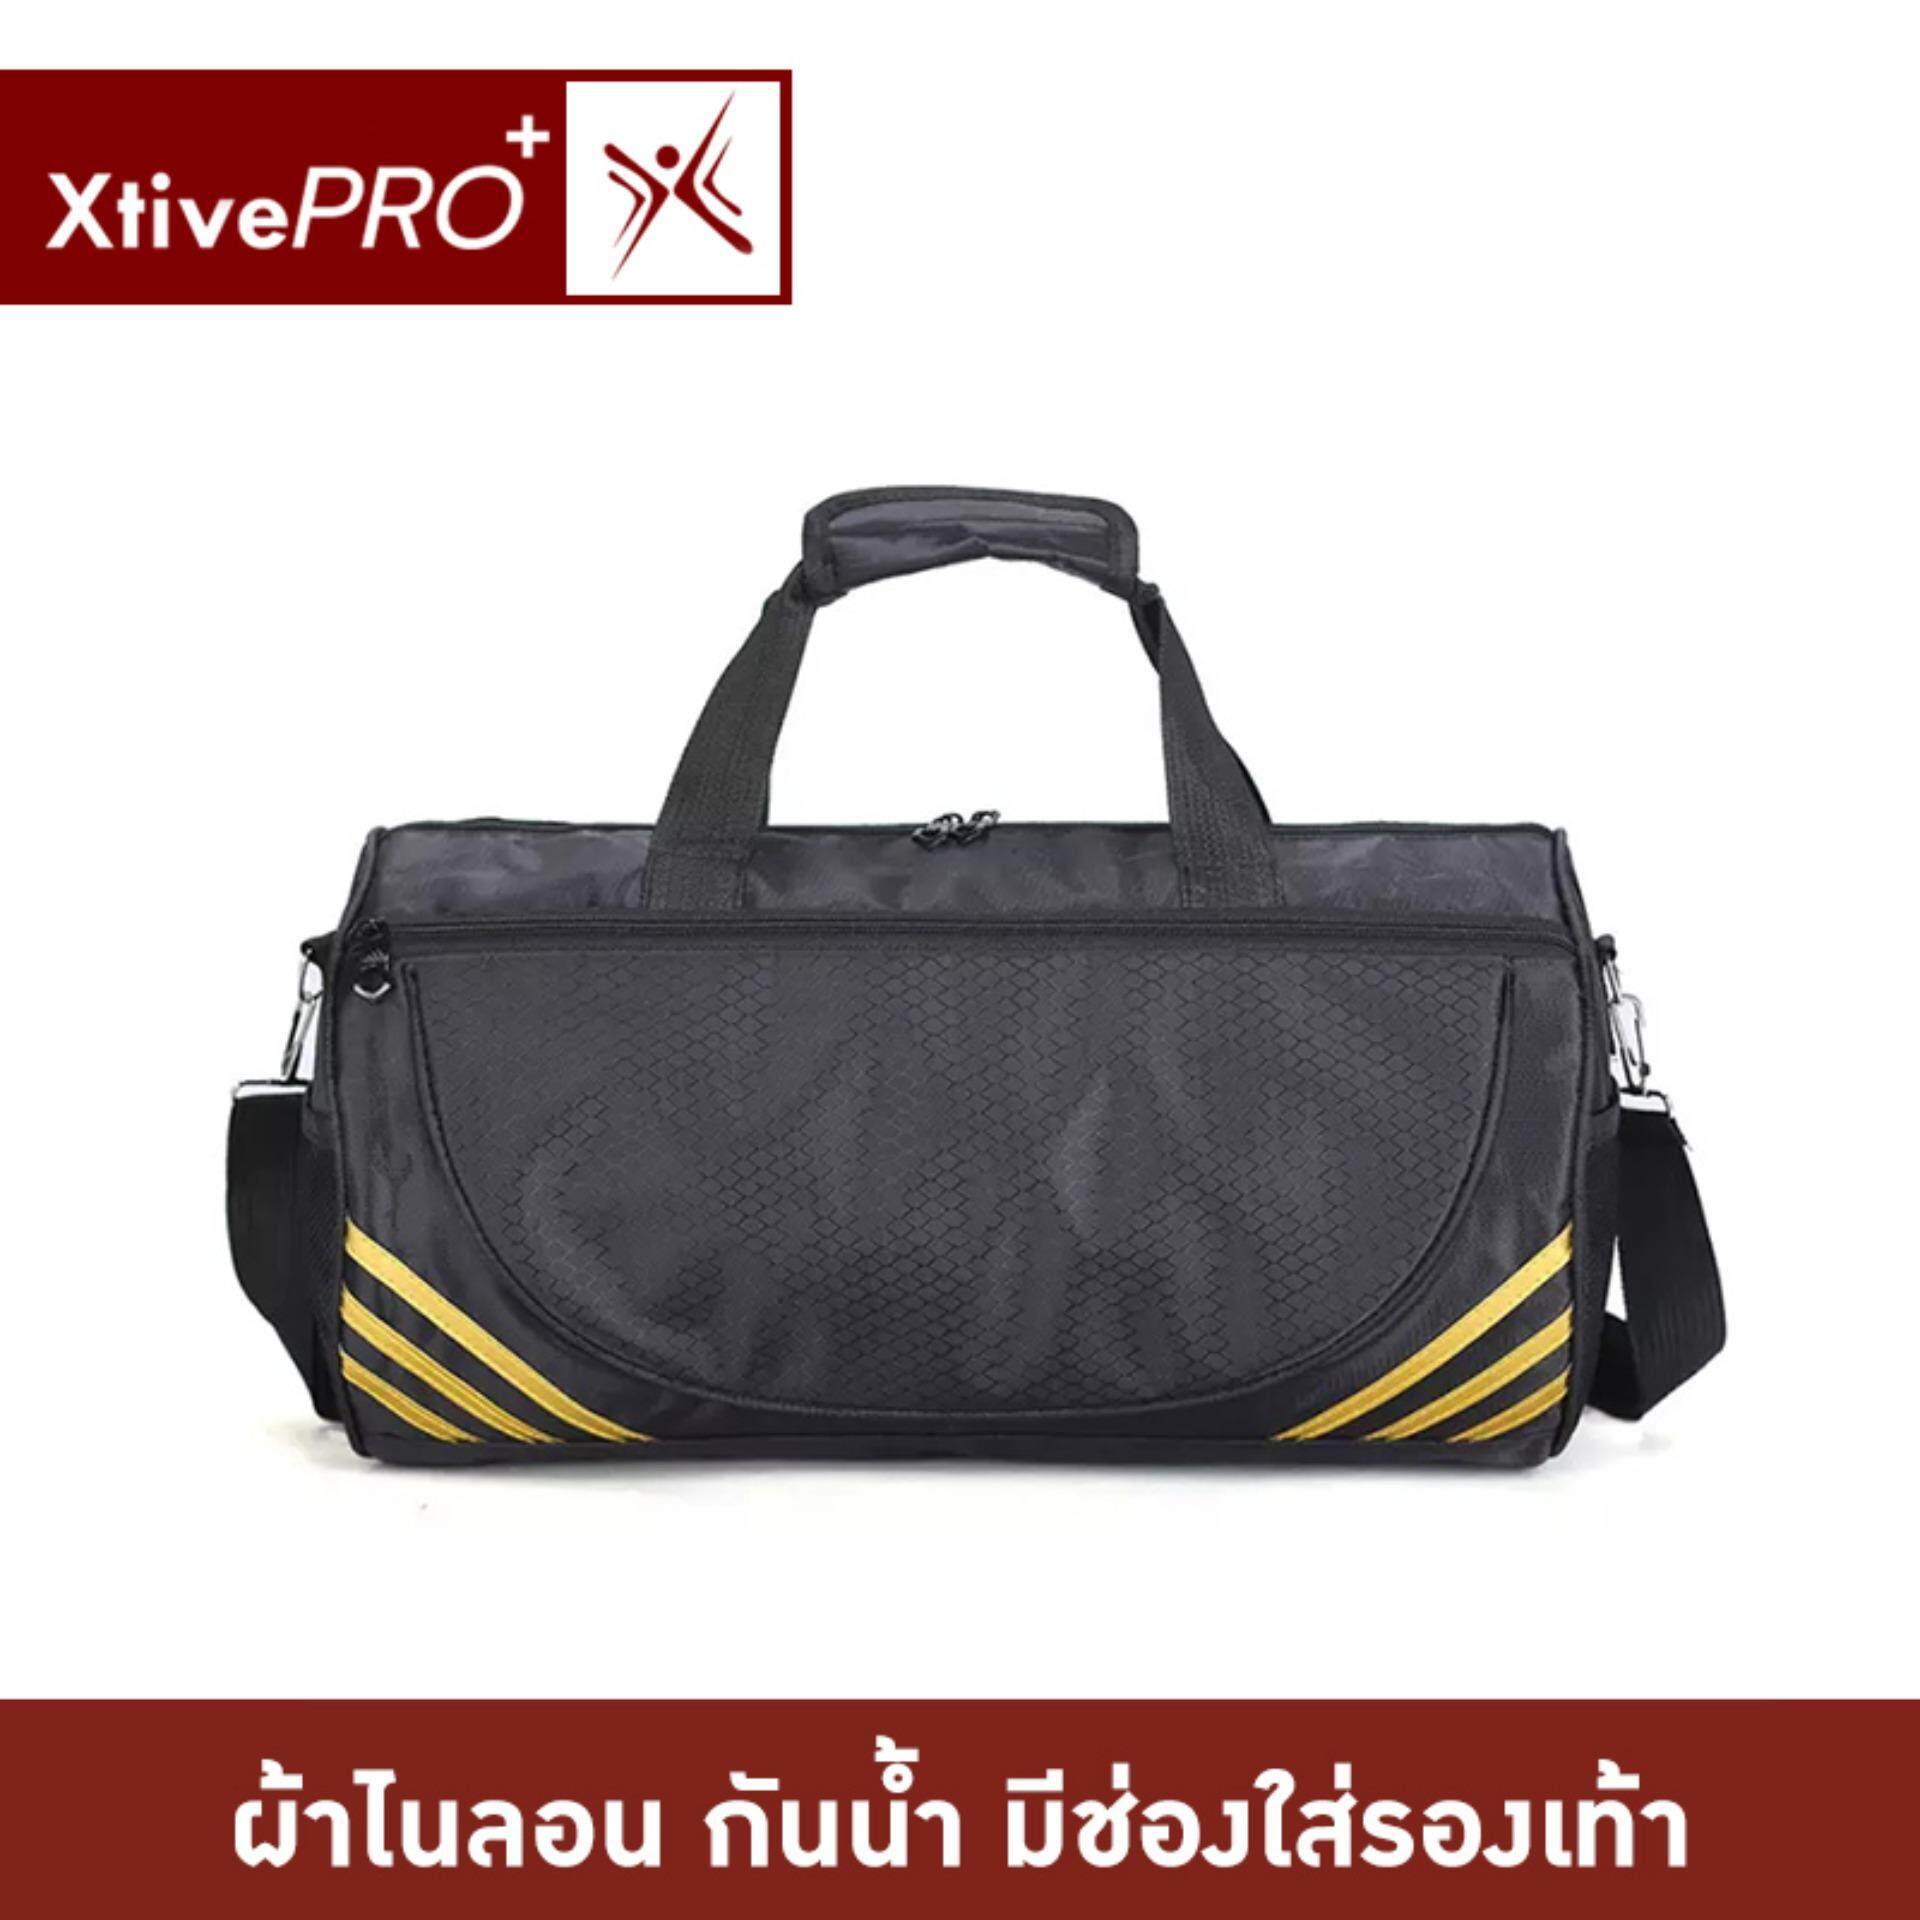 XtivePro - professional sports bag กระเป๋าฟิตเนส กระเป๋าเดินทาง ผ้าไนลอน กันน้ำ มีช่องใส่รองเท้า